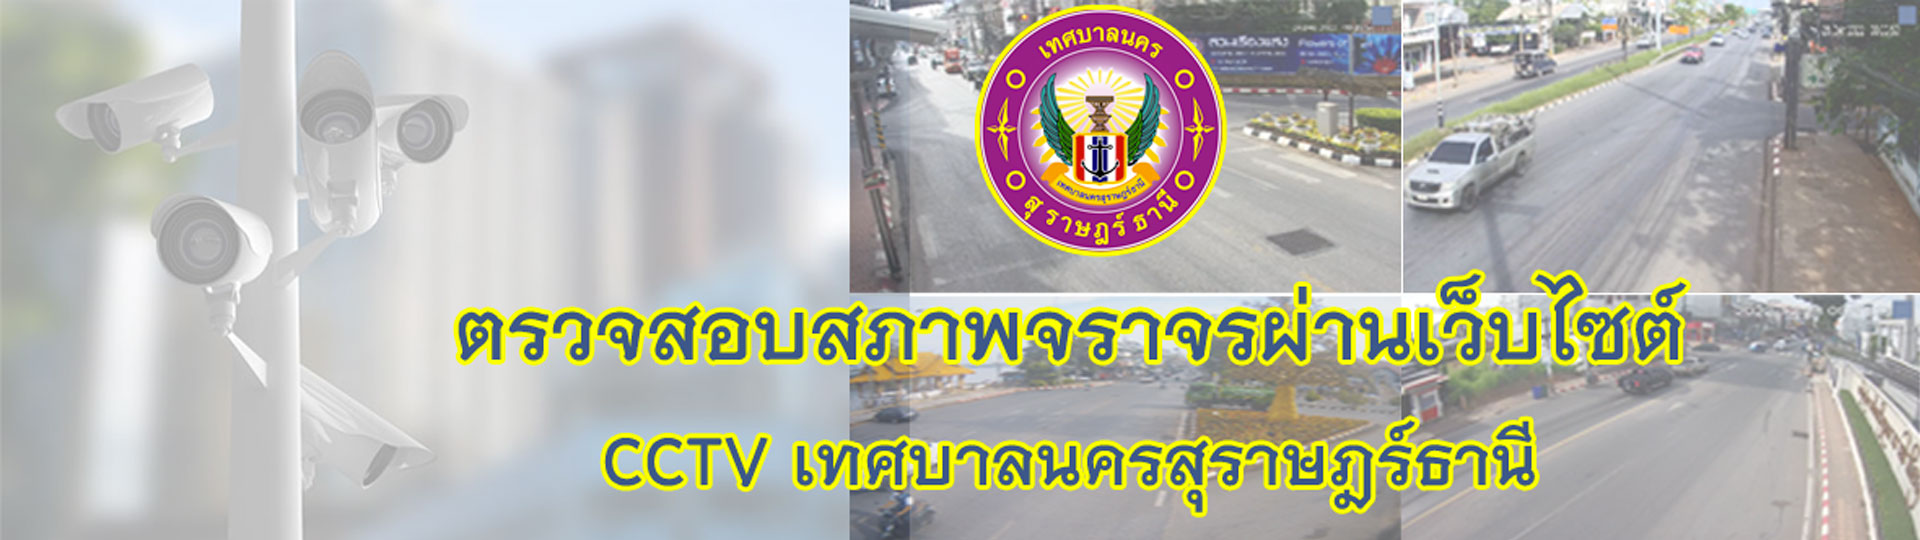 CCTV เทศบาลนครสุราษฎร์ธานี Image 1